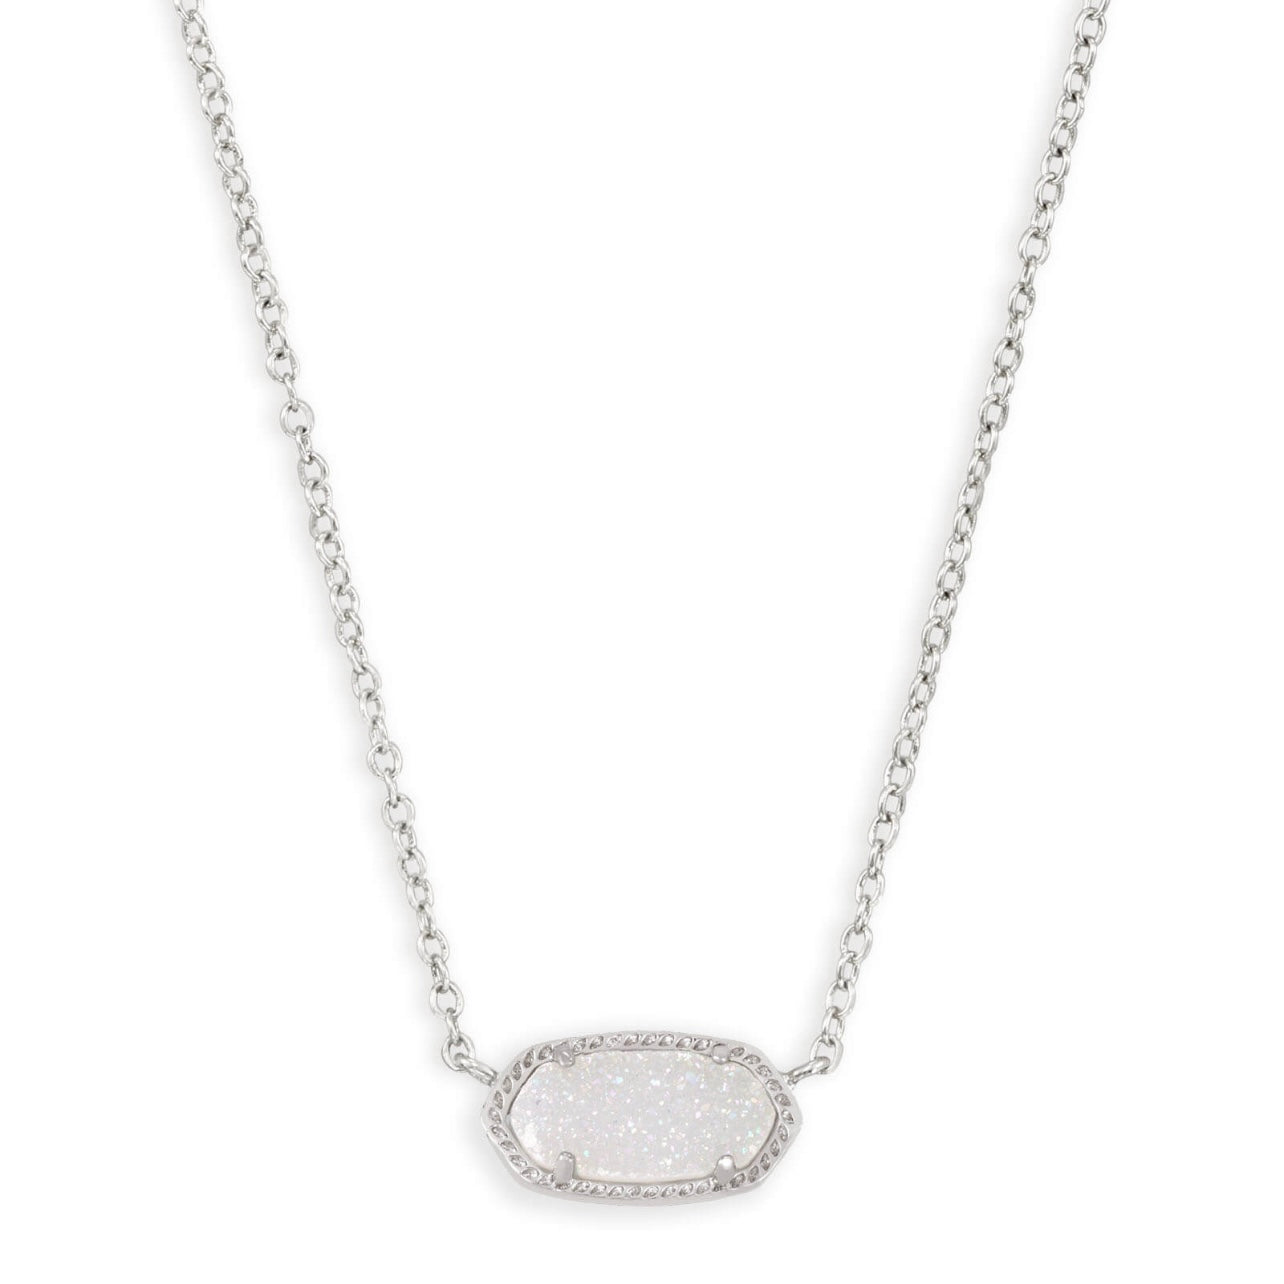 Kendra Scott Elisa Silver Pendant Necklace - The Street Boutique 